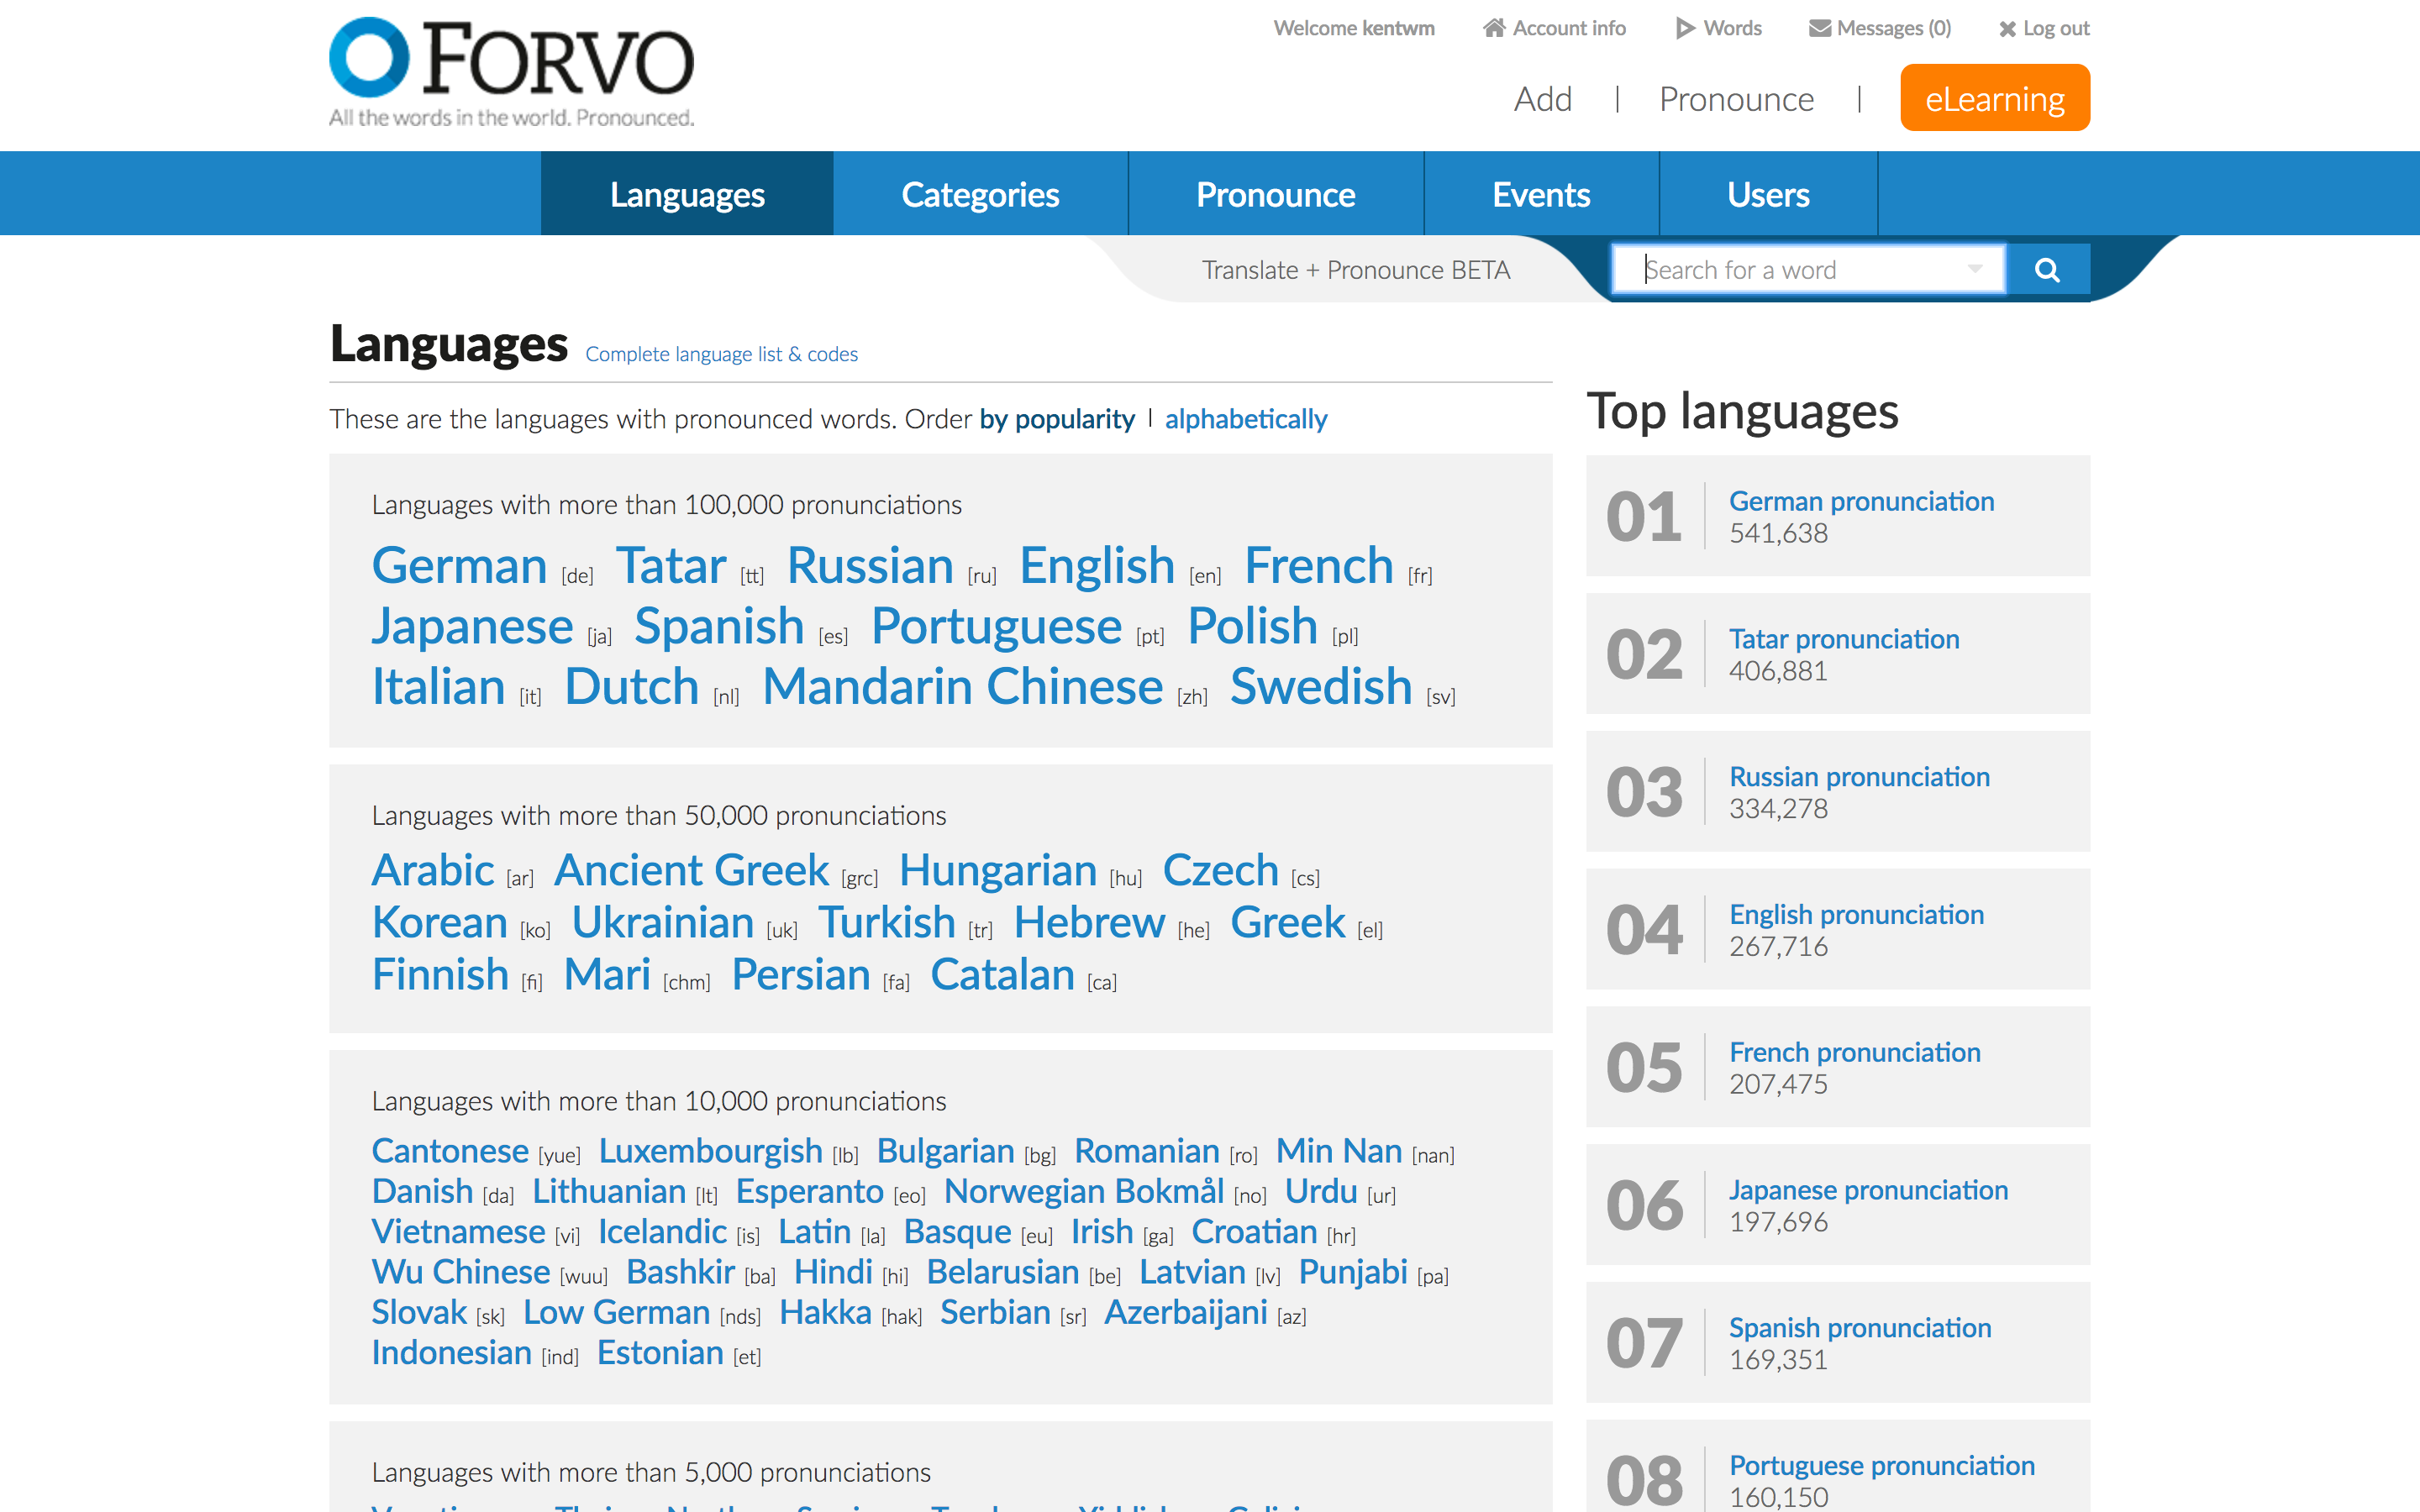 Languages available on Forvo